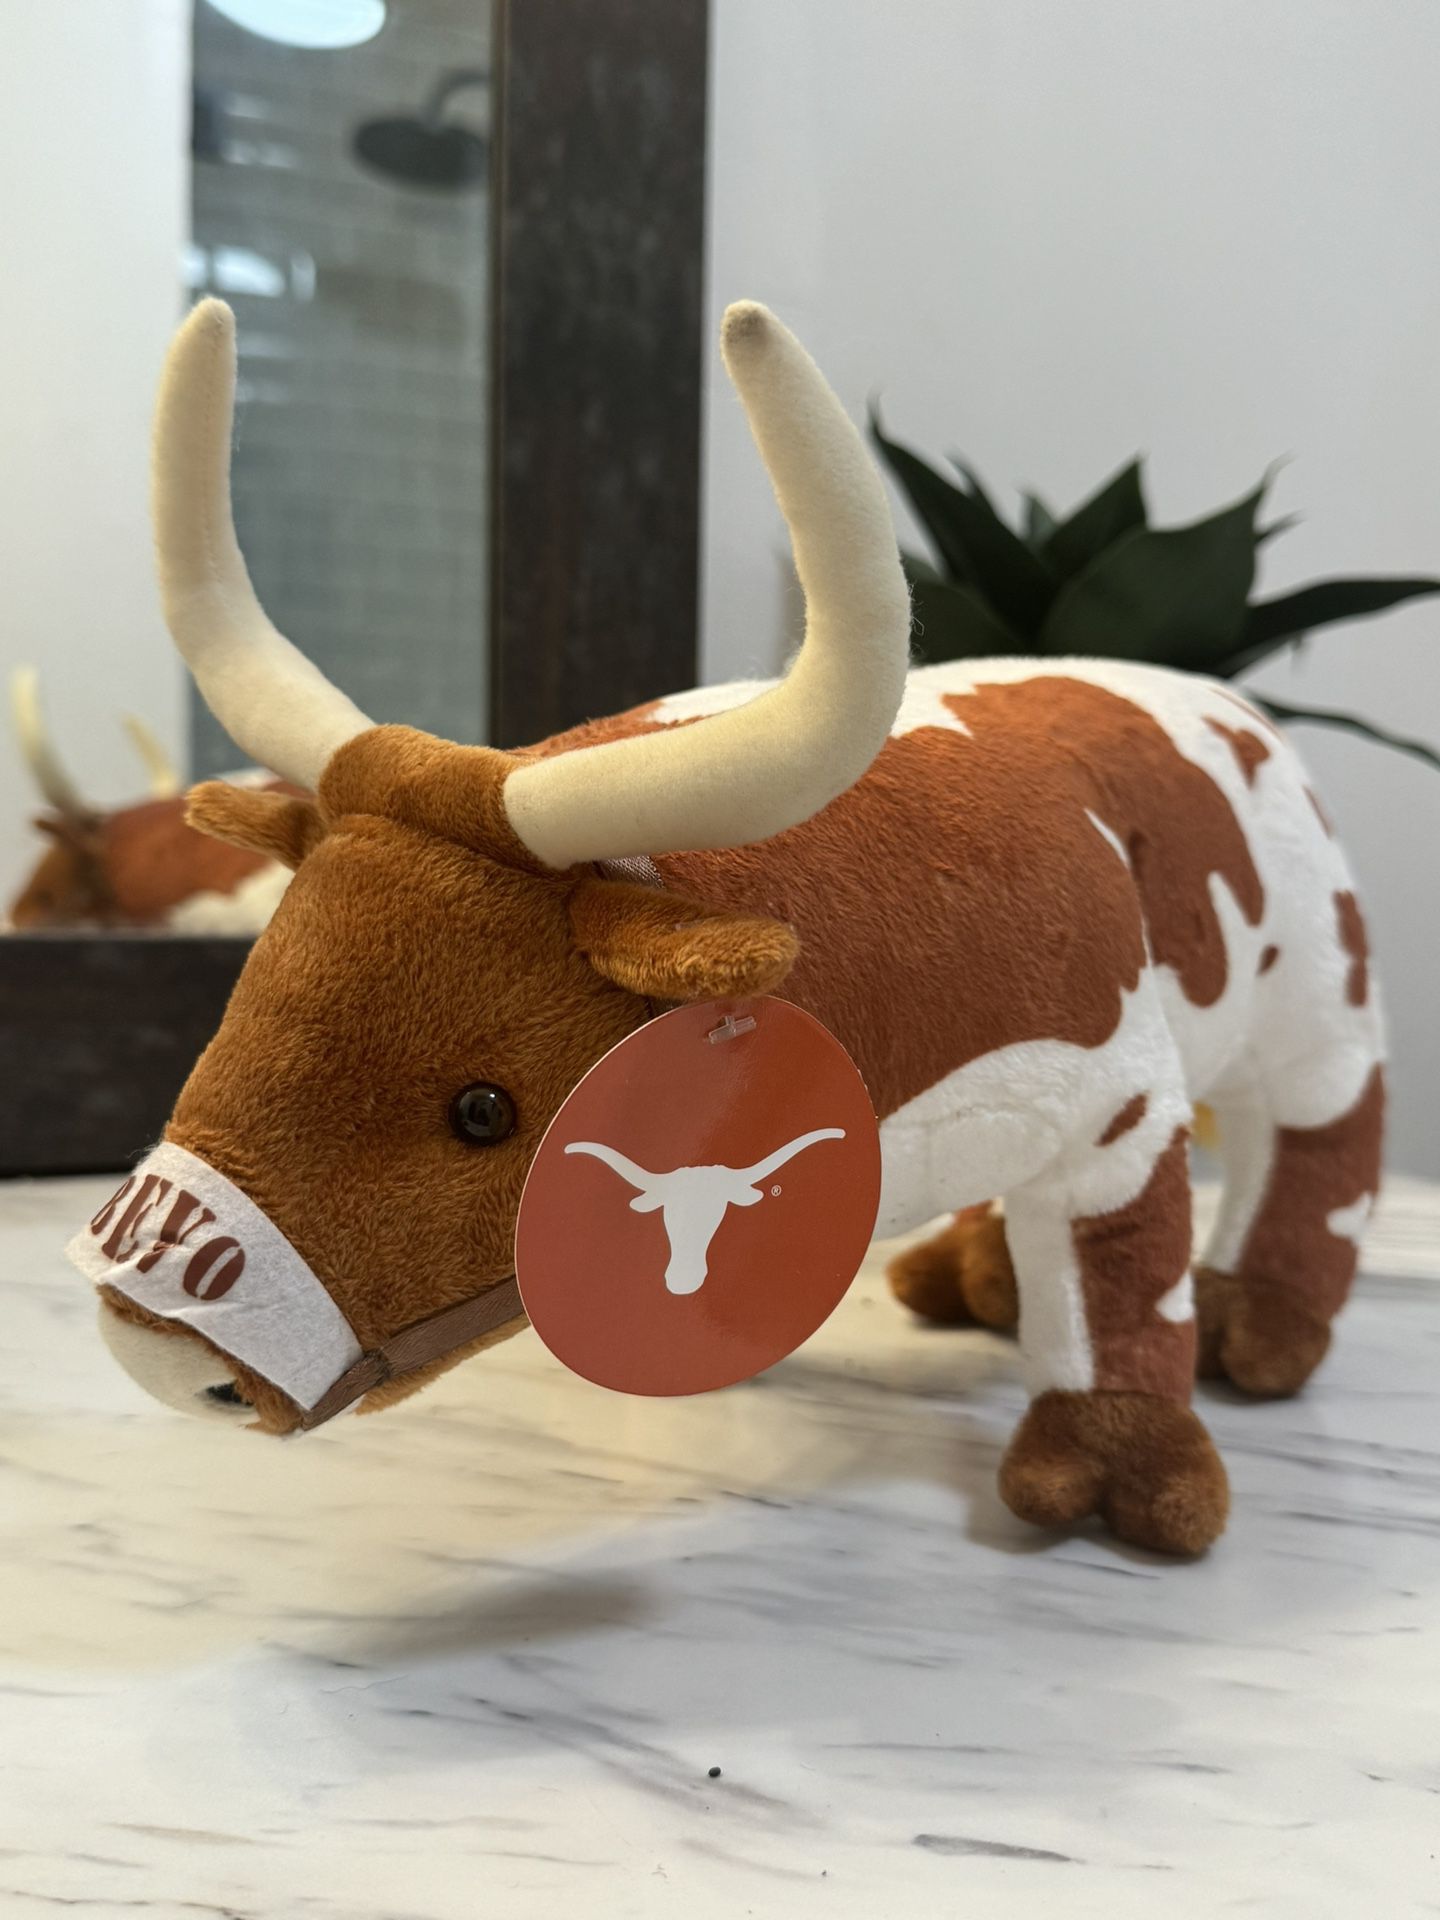 Texas Longhorn Bull Plush Stuffed Animal